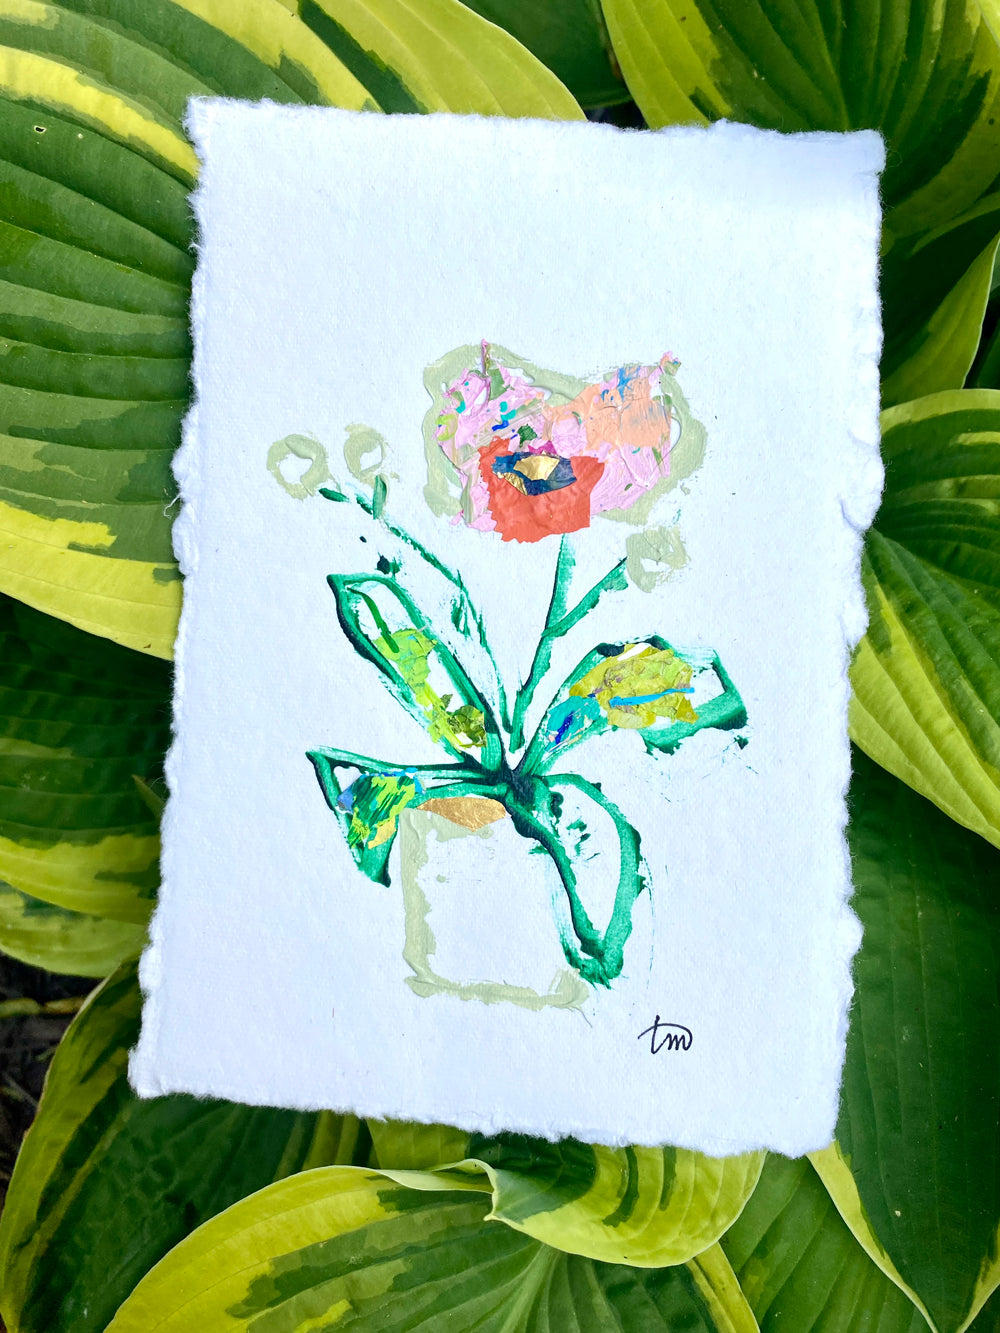 Blooming Girls & Custom Silhouette Portrait Workshop - April 25